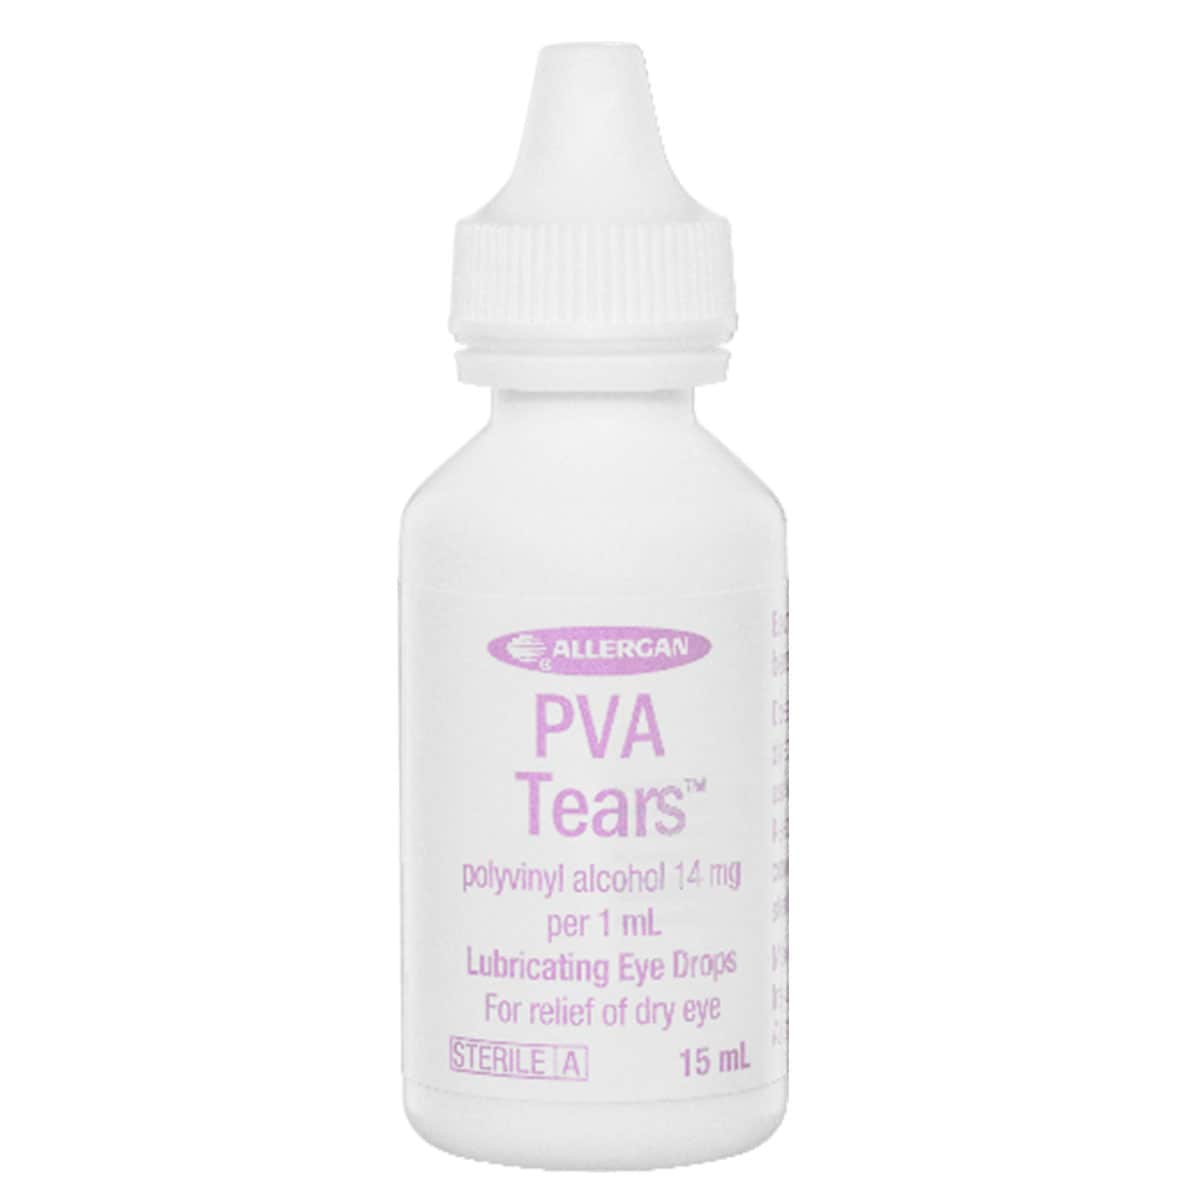 PVA Tears Lubricating Eye Drops 15ml